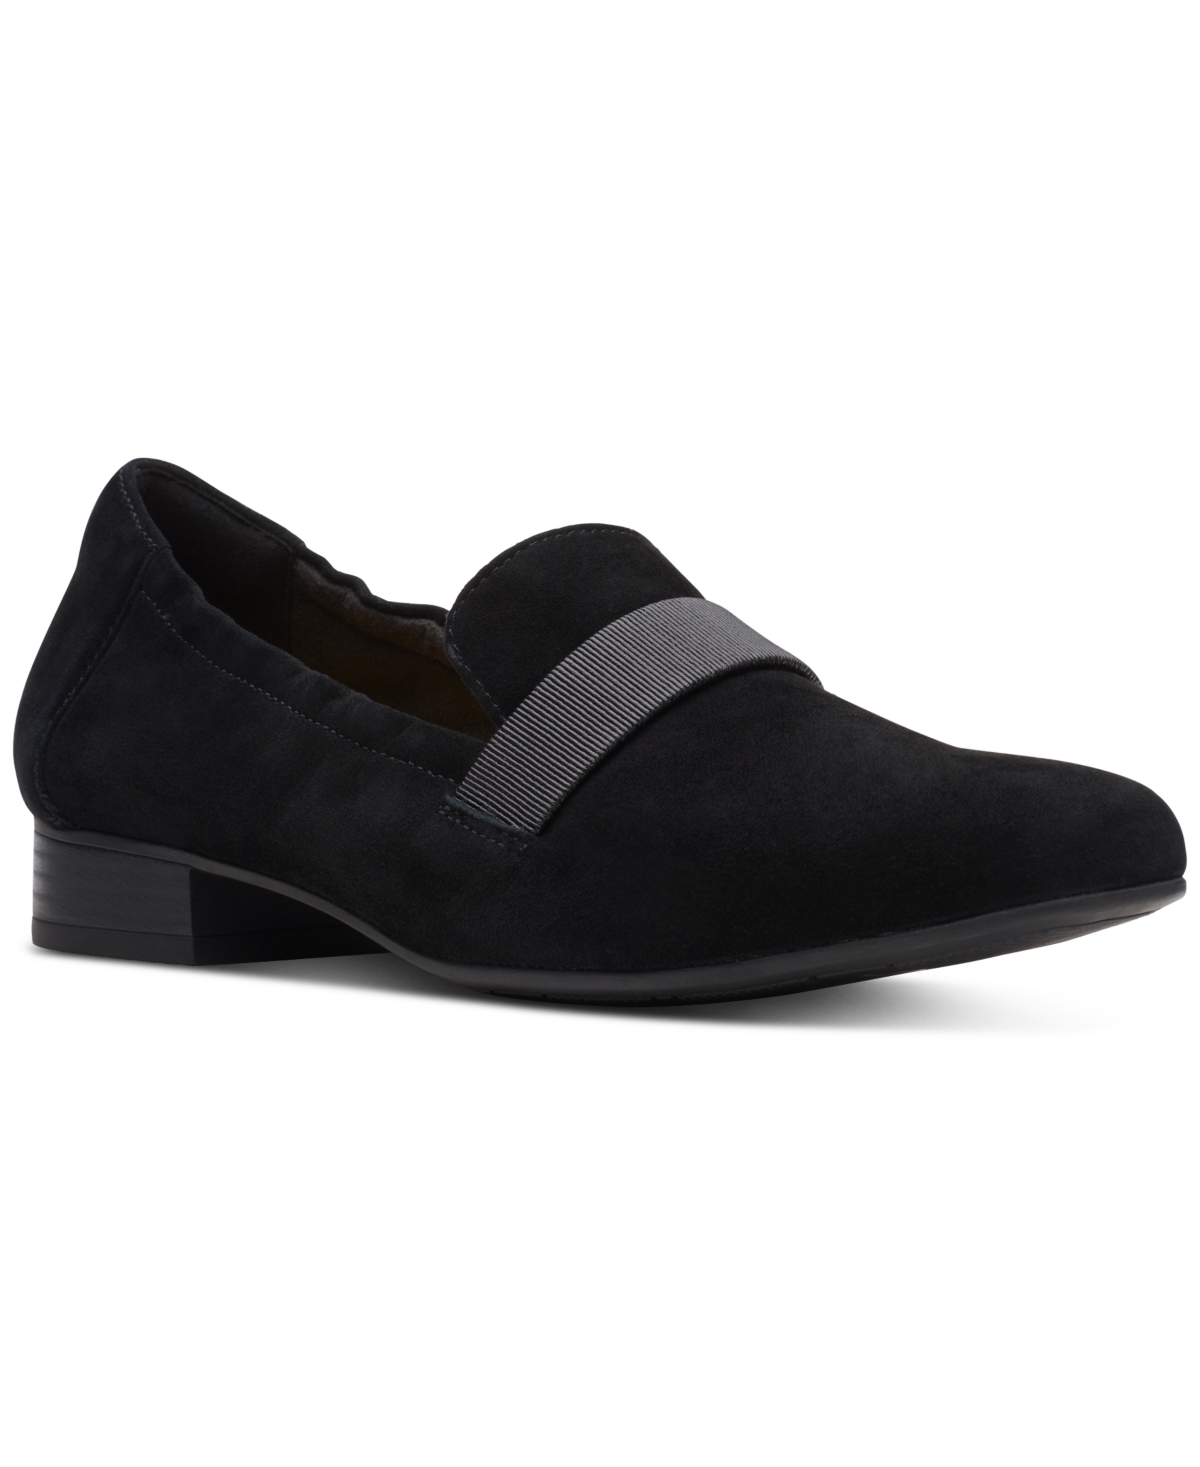 Clarks Women's Tilmont Eve Slip-on Comfort Loafer Flats In Black